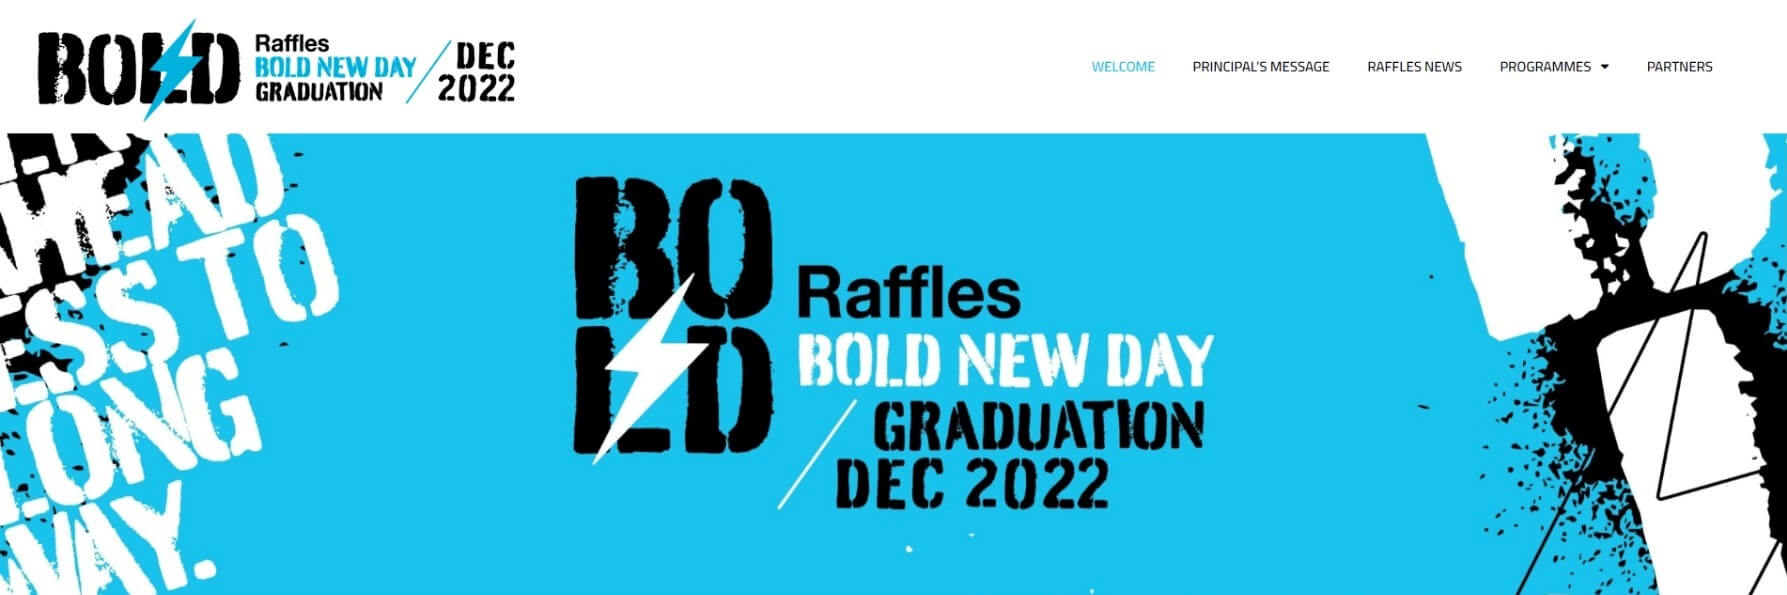 Raffles Graduation 2022 Website Cover Image